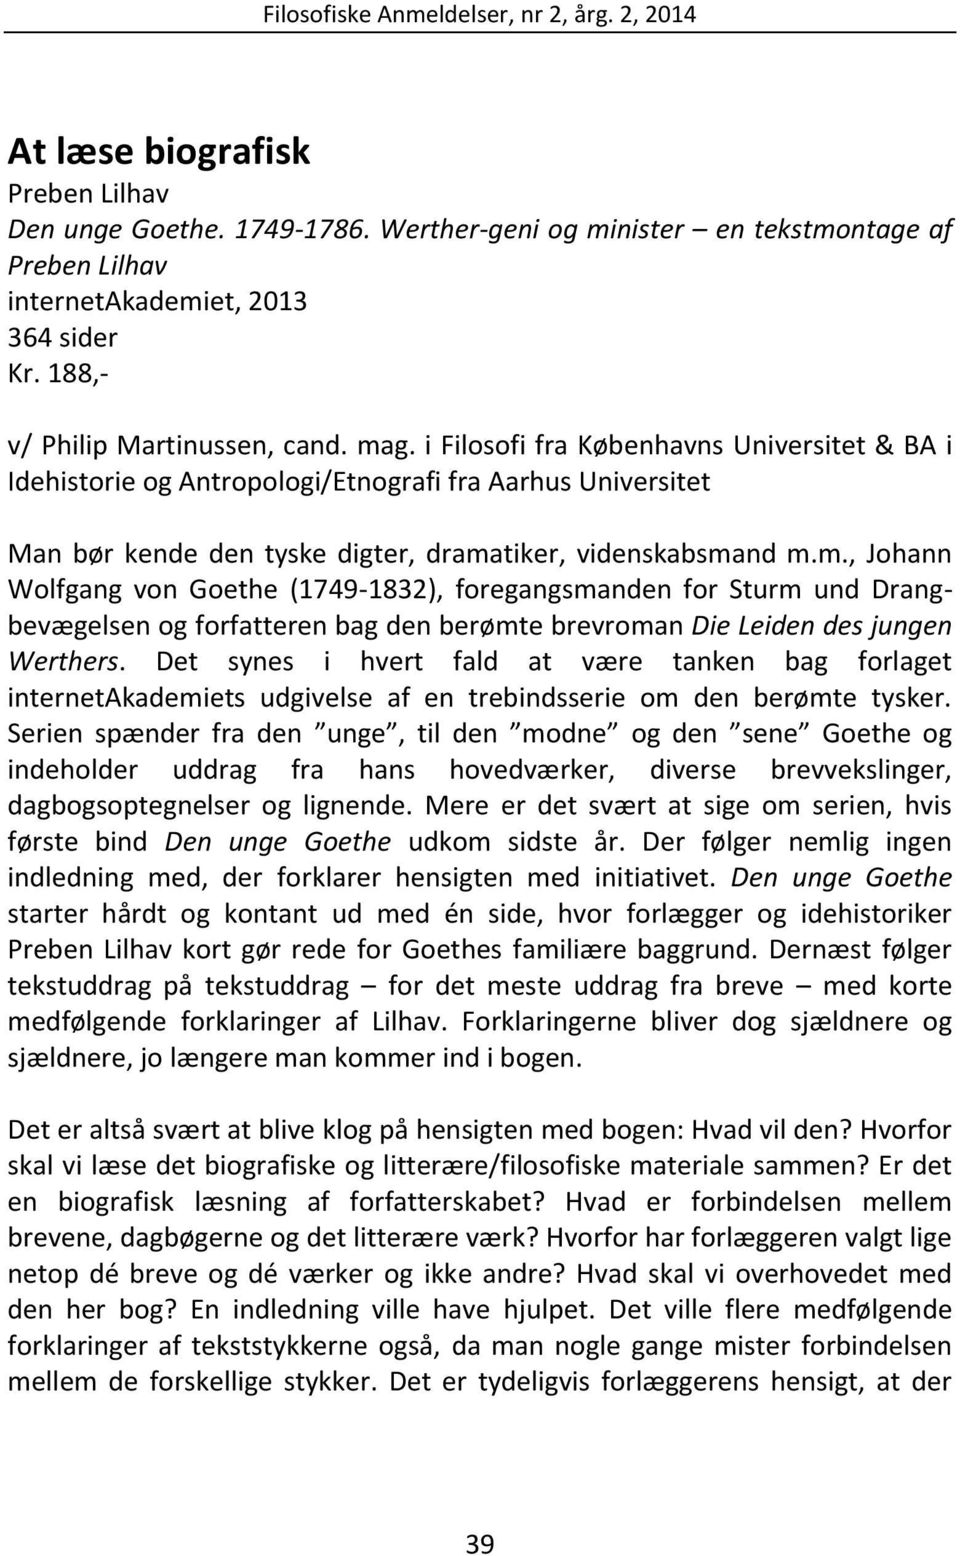 tiker, videnskabsmand m.m., Johann Wolfgang von Goethe (1749-1832), foregangsmanden for Sturm und Drangbevægelsen og forfatteren bag den berømte brevroman Die Leiden des jungen Werthers.